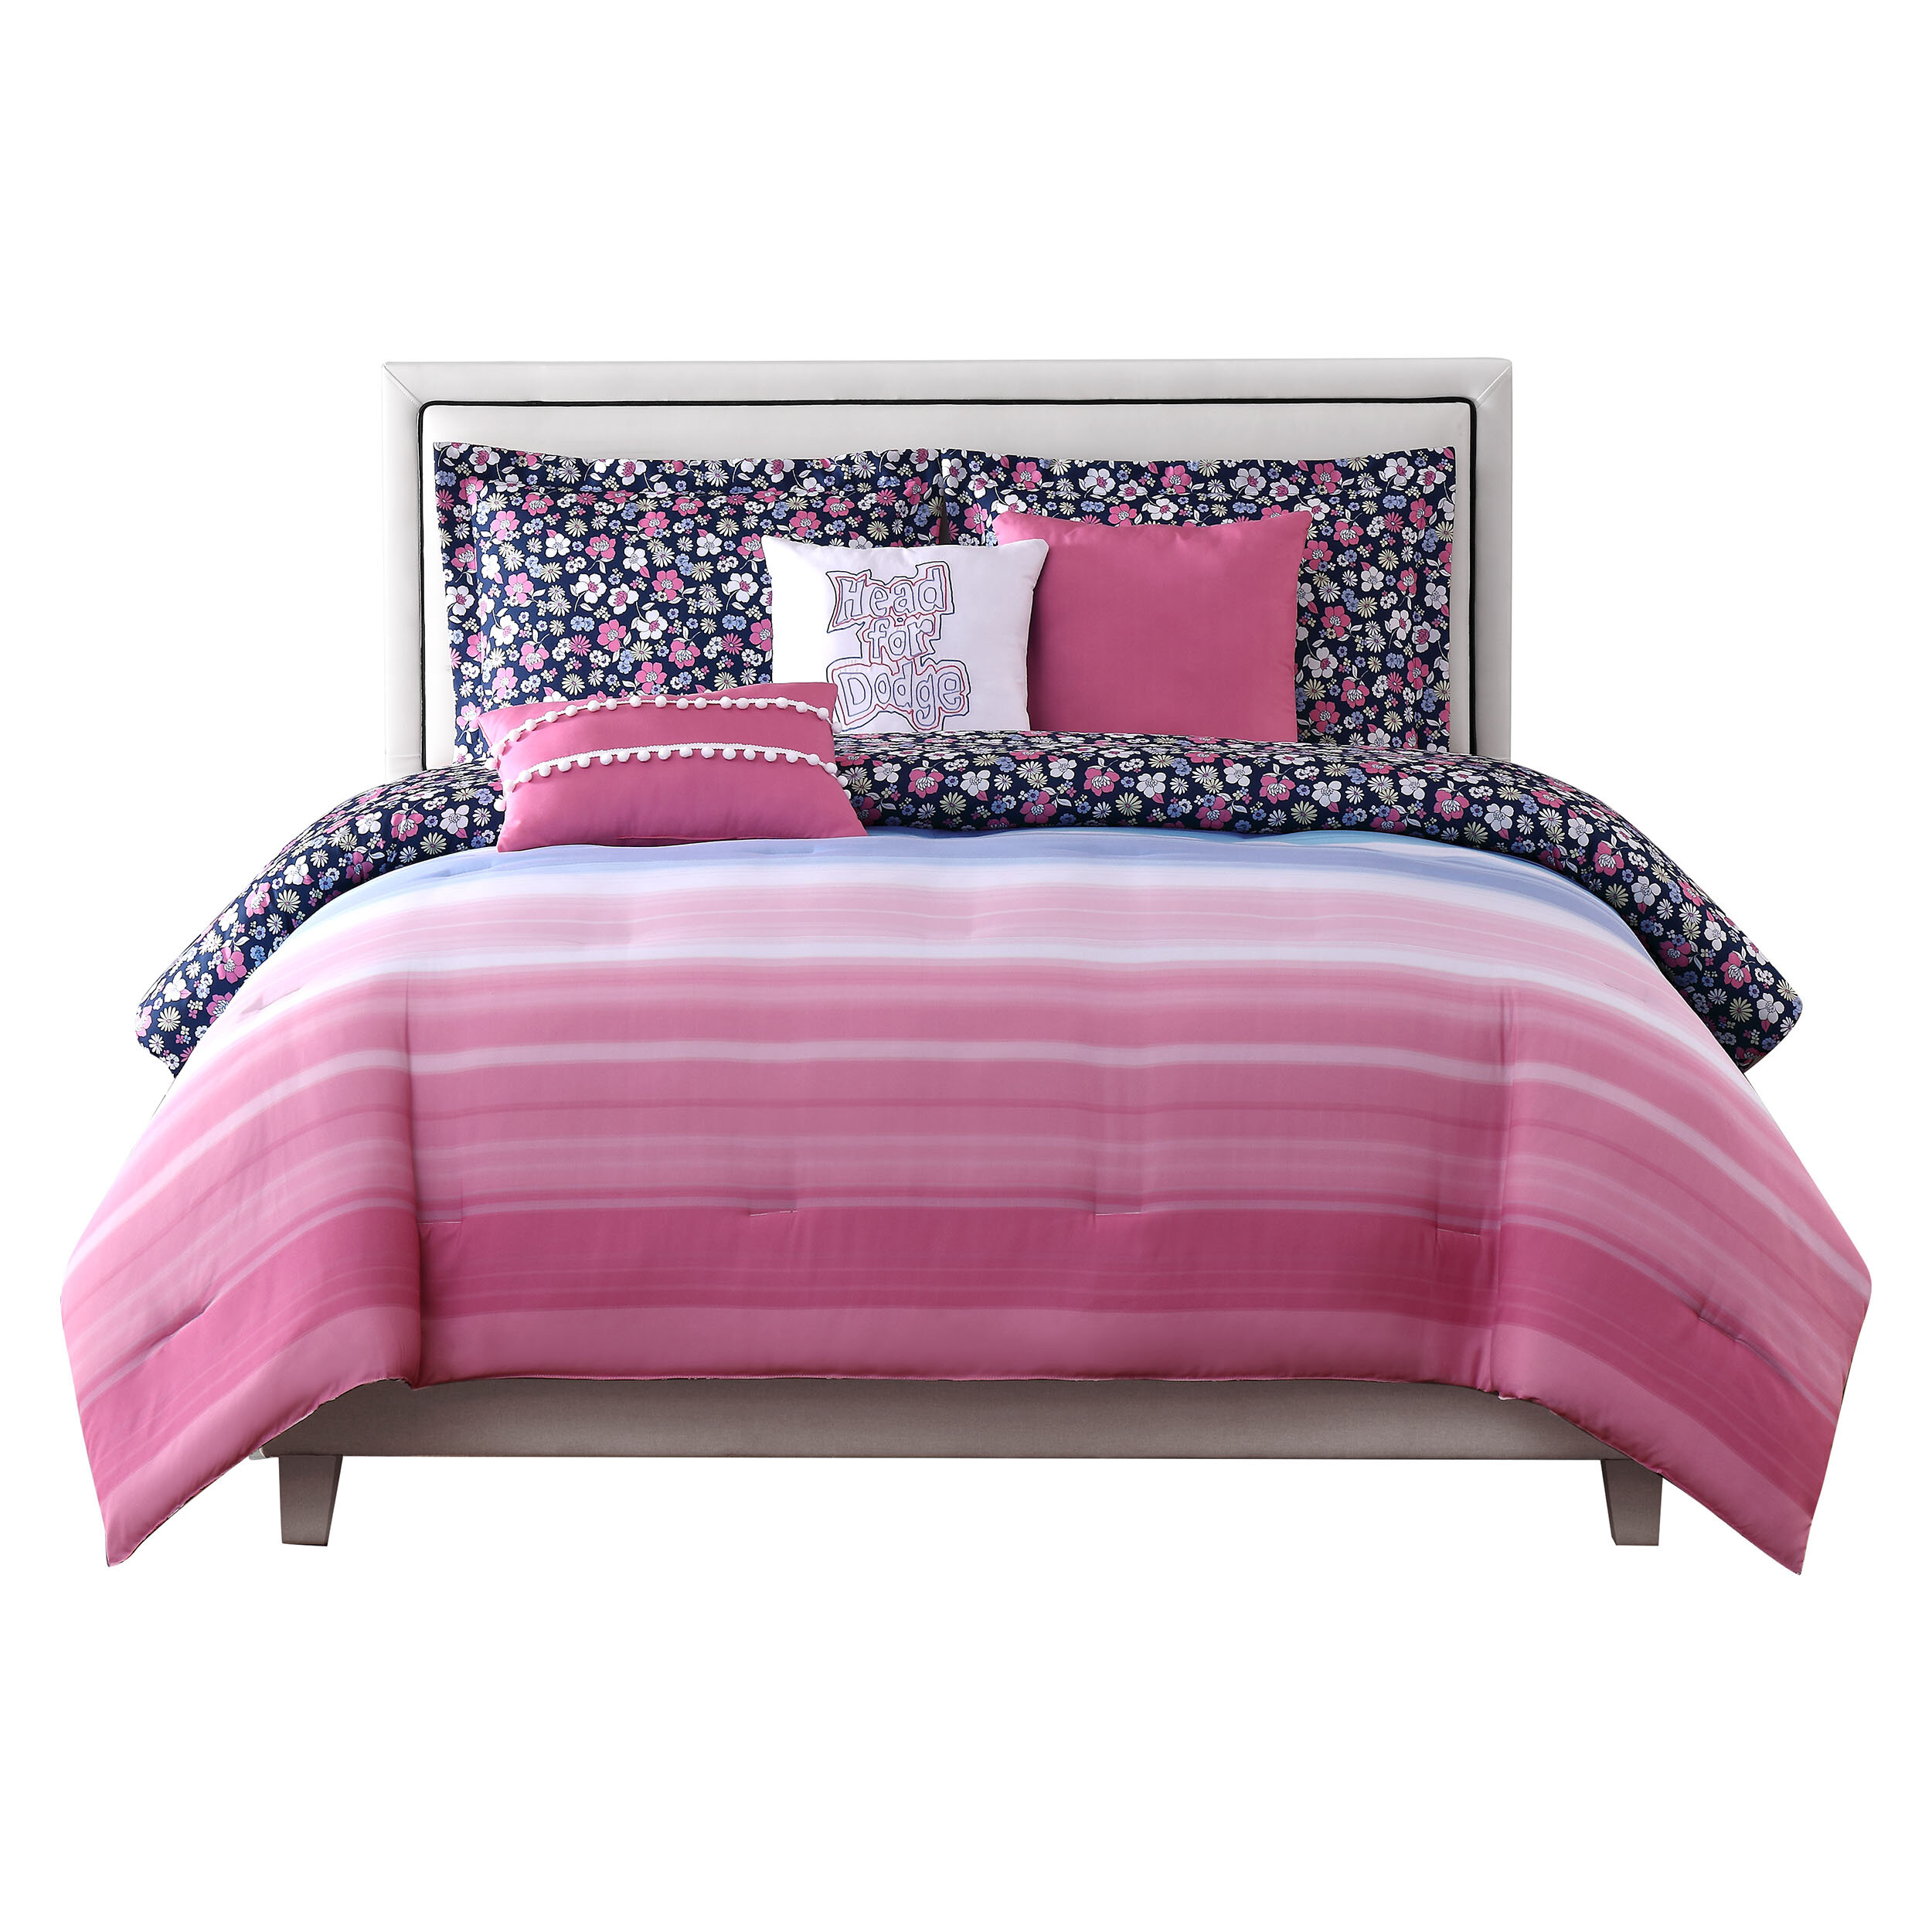 pink and blue comforter set